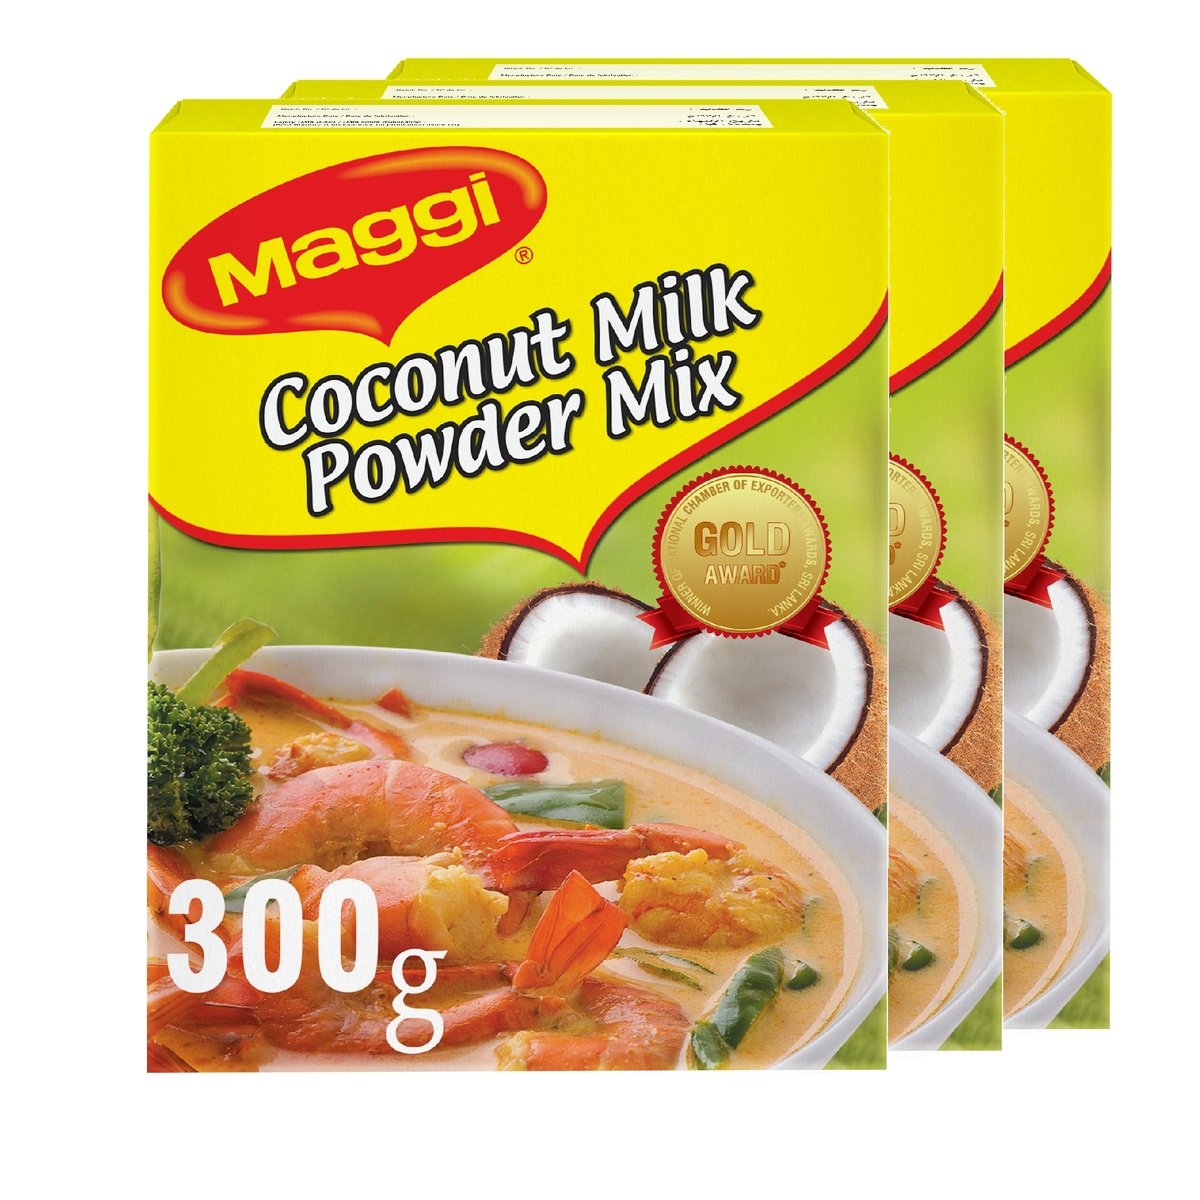 Maggi Coconut Milk Powder Mix 3 x 300g